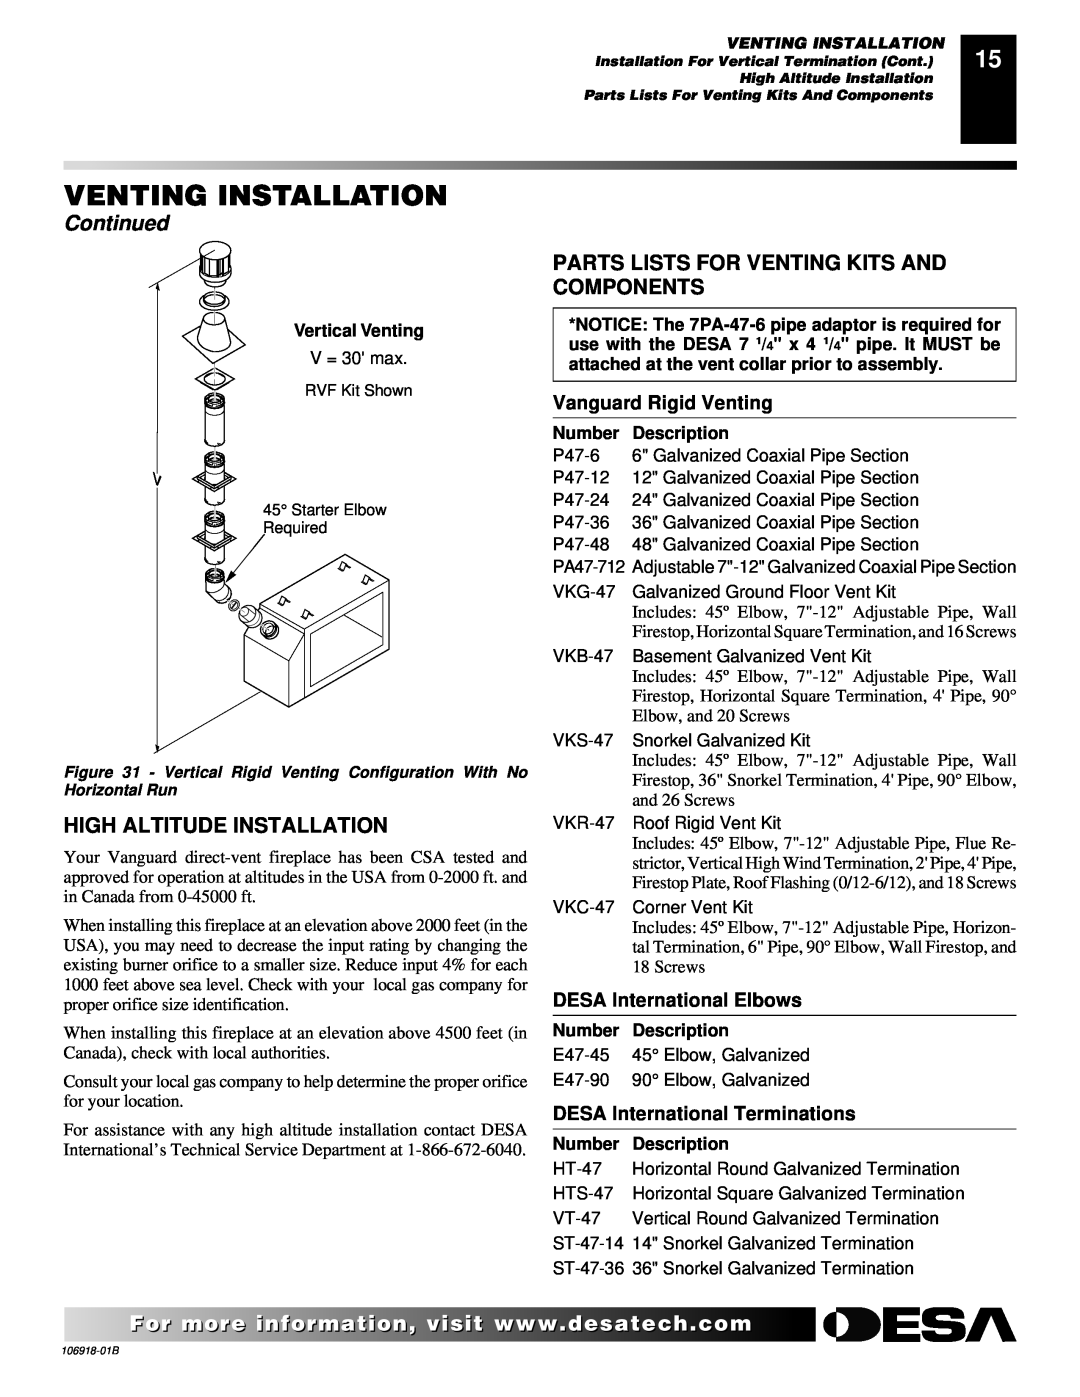 Desa VDDVF36STN/STP High Altitude Installation, Parts Lists For Venting Kits And Components, Vanguard Rigid Venting 